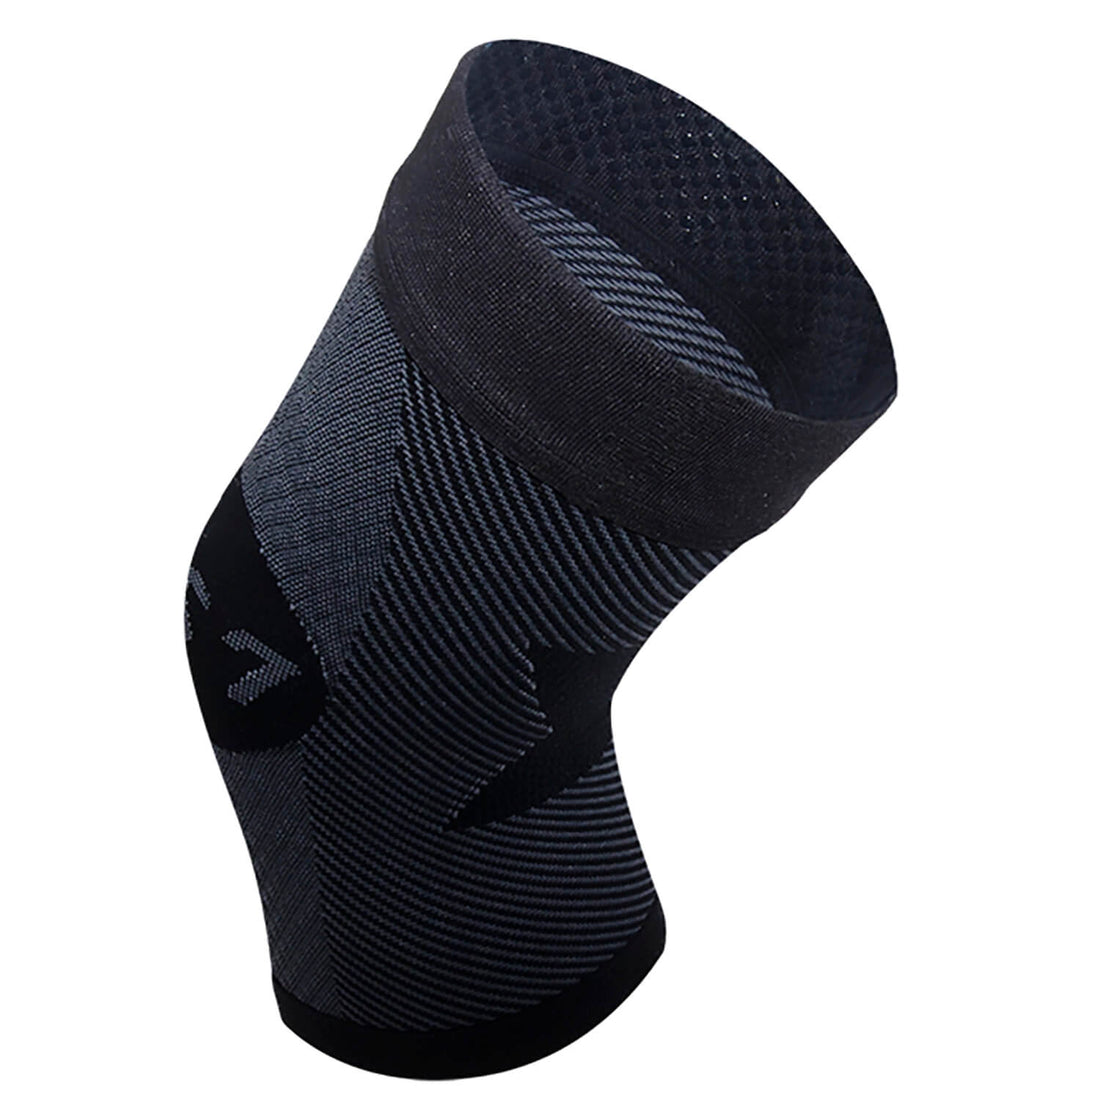  OrthoSleeve Stabilizing Compression Knee Brace KS8